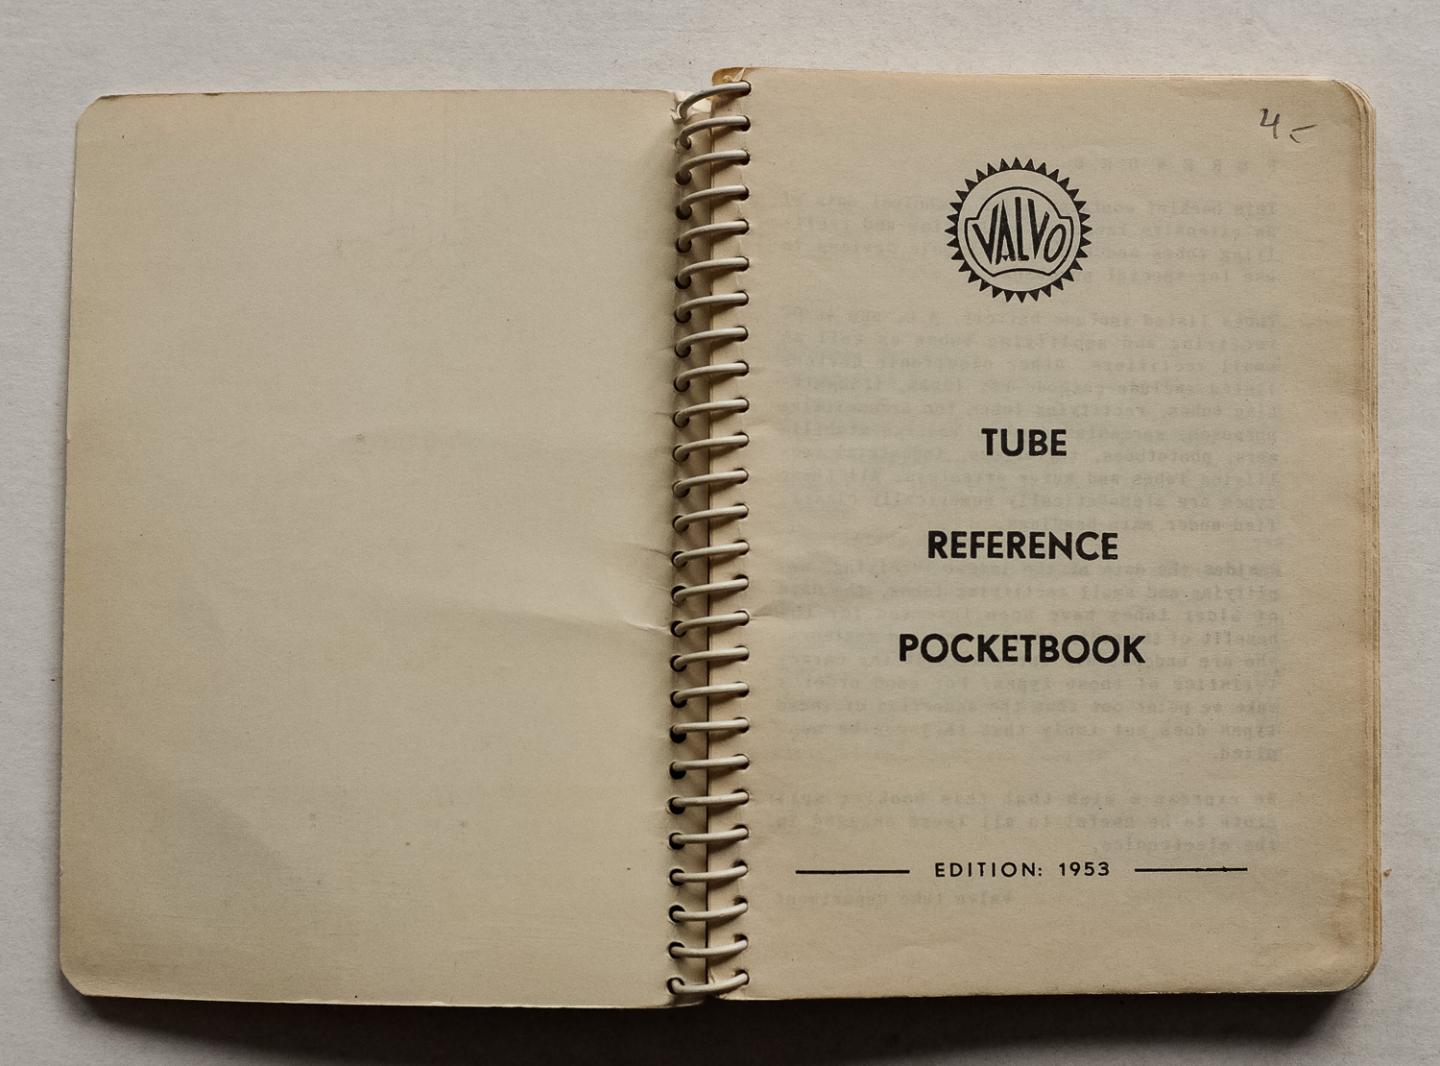 VALVO - Valvo tube reference pocketbook  - edition 1953